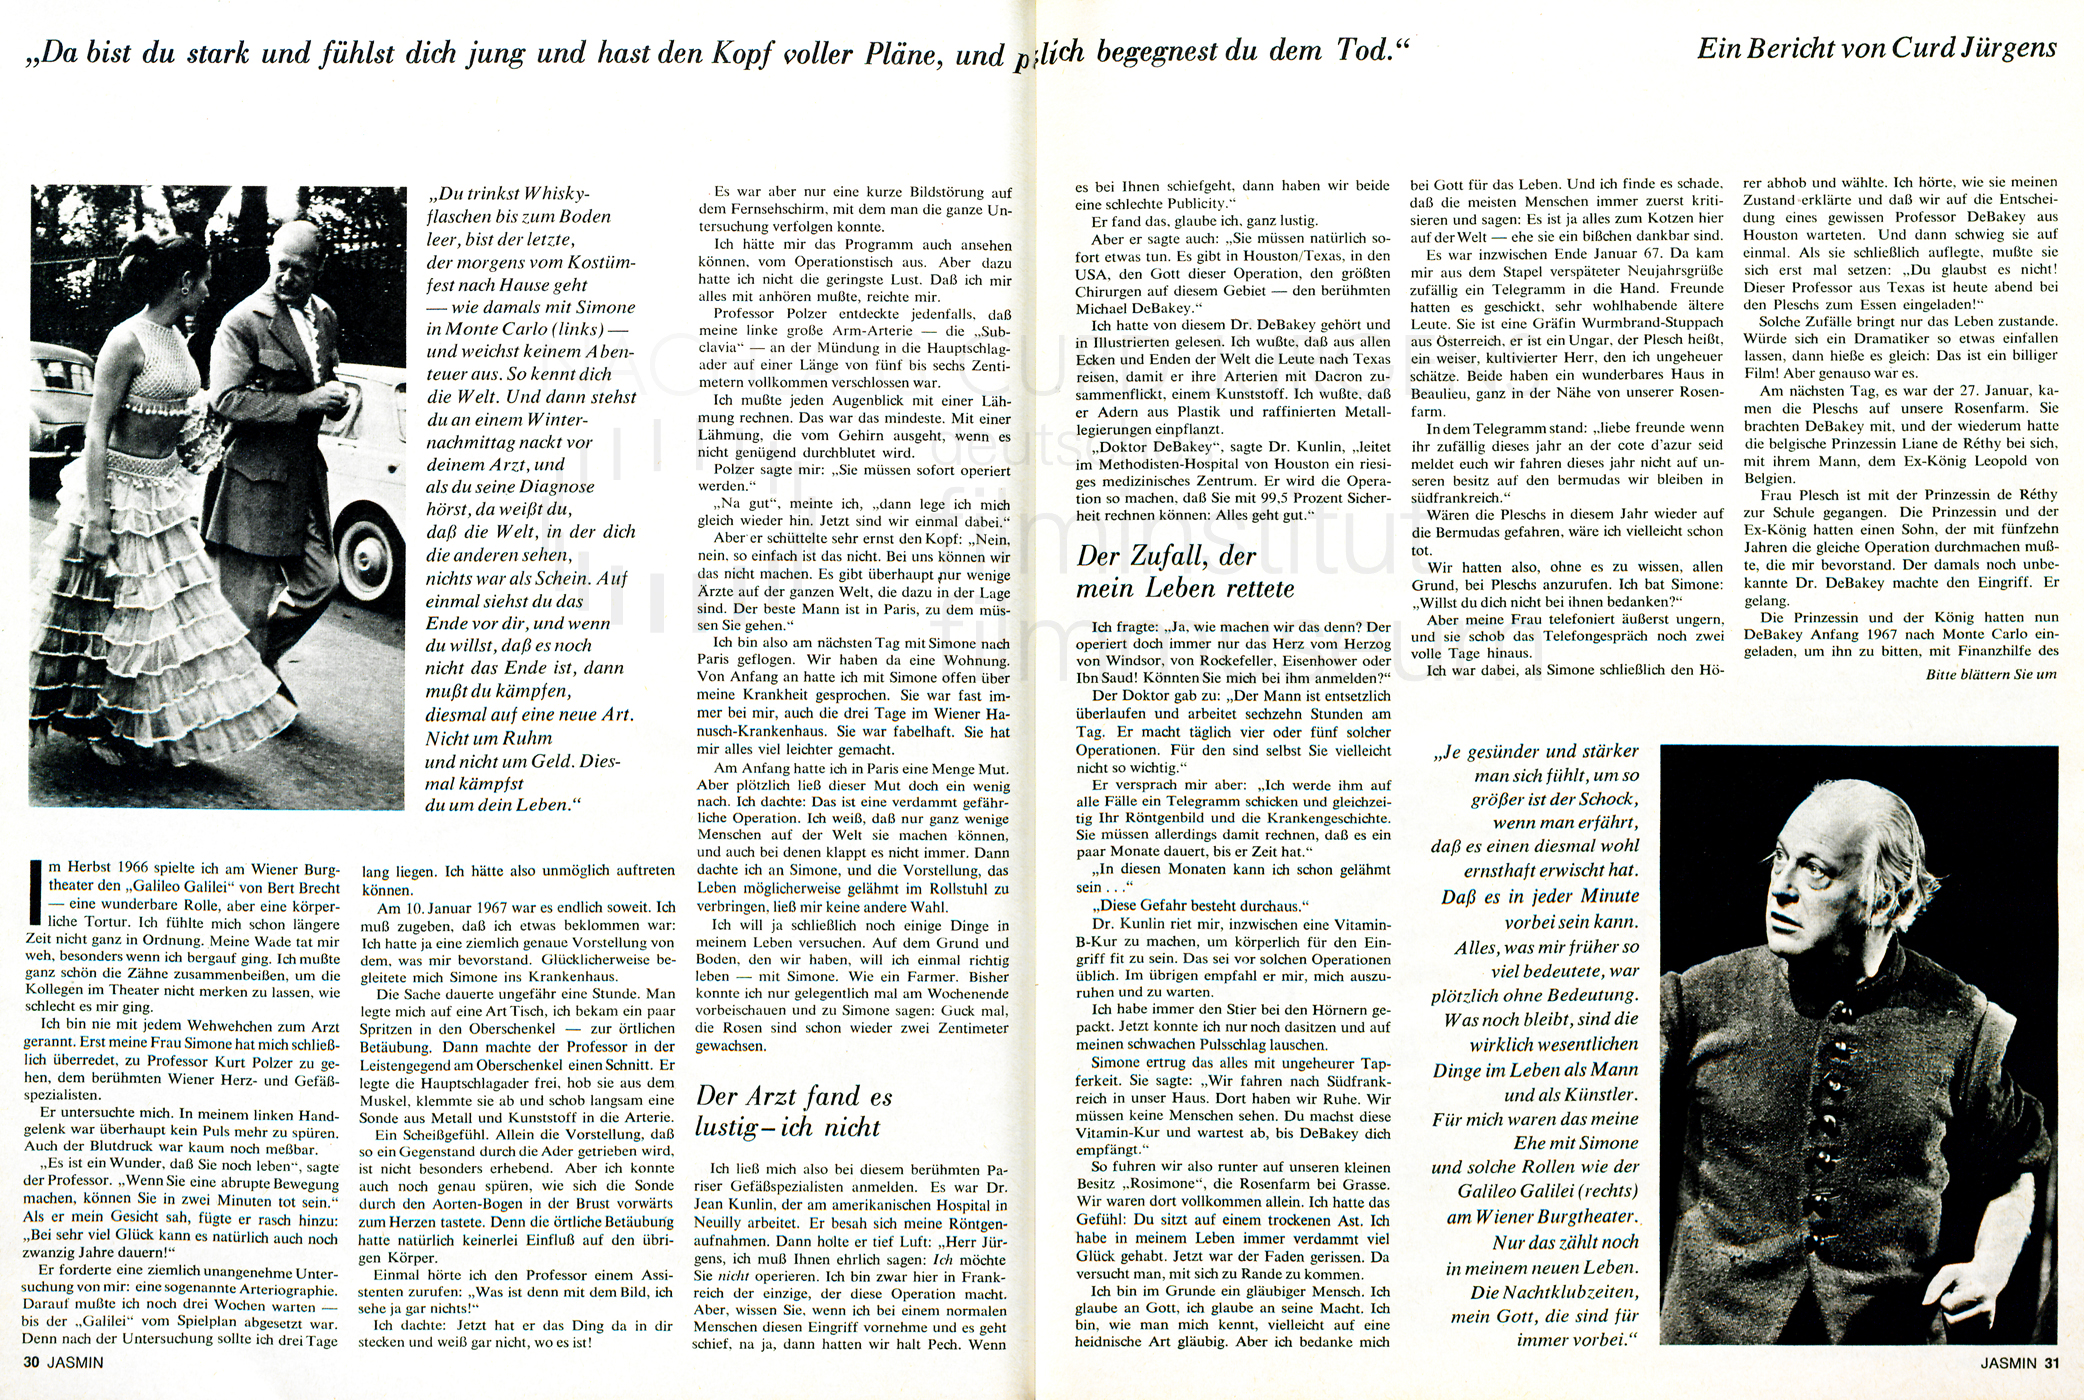 Jasmin: „Fünf Zentimeter Kunststoff in der Brust“, Nr. 6, 1968